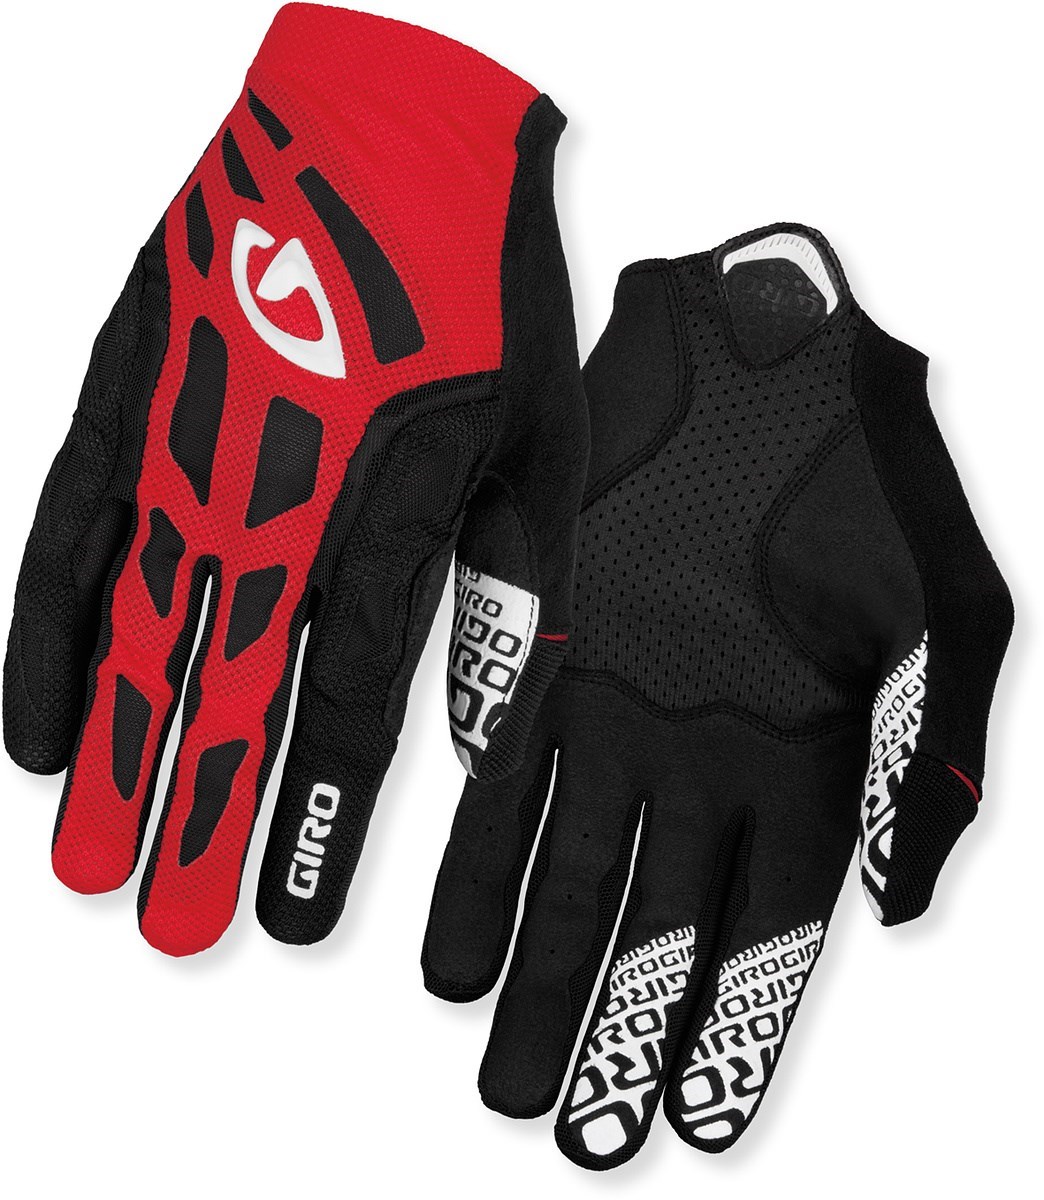 Giro Rivet Long Finger Cycling Gloves product image